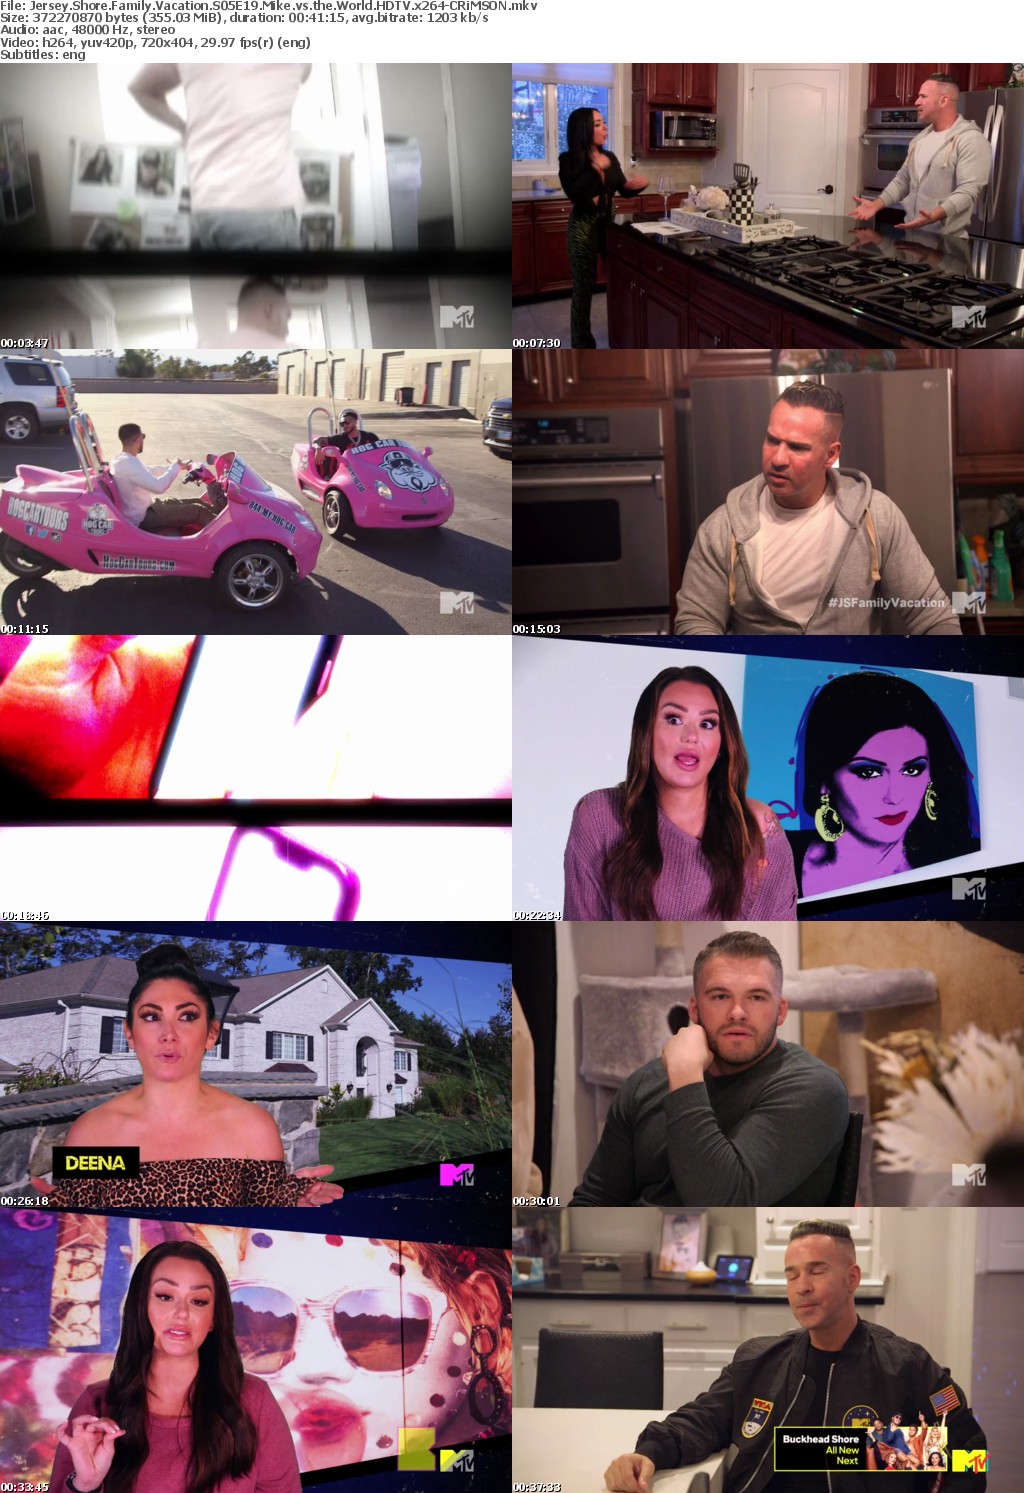 Jersey Shore Family Vacation S05E19 Mike vs the World HDTV x264-CRiMSON